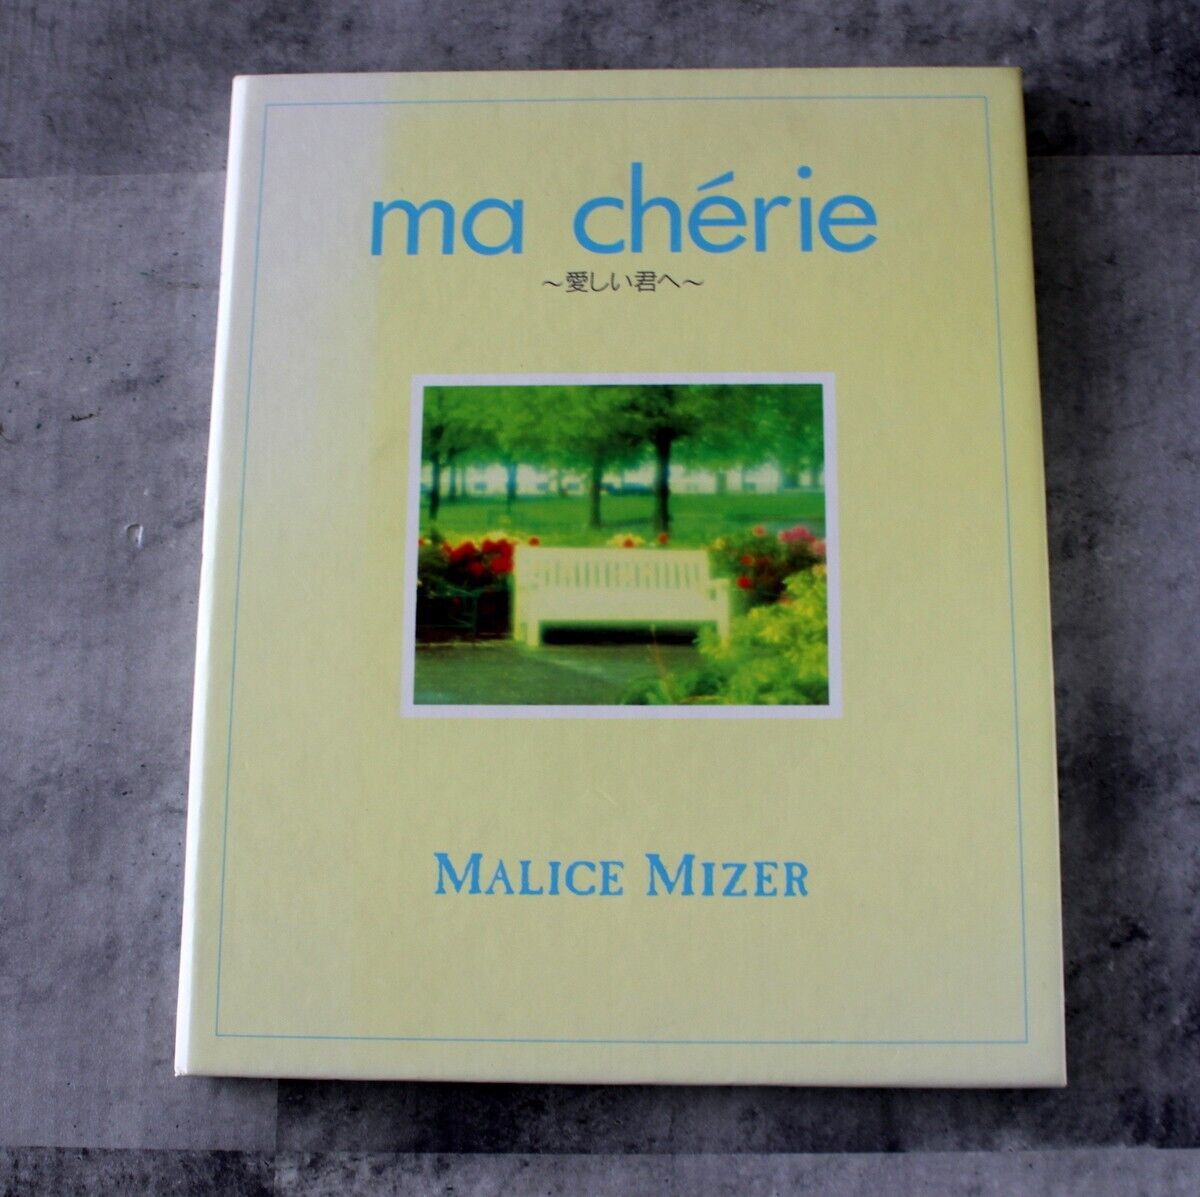 Malice Mizer ma cherie Limited edition Japan CD